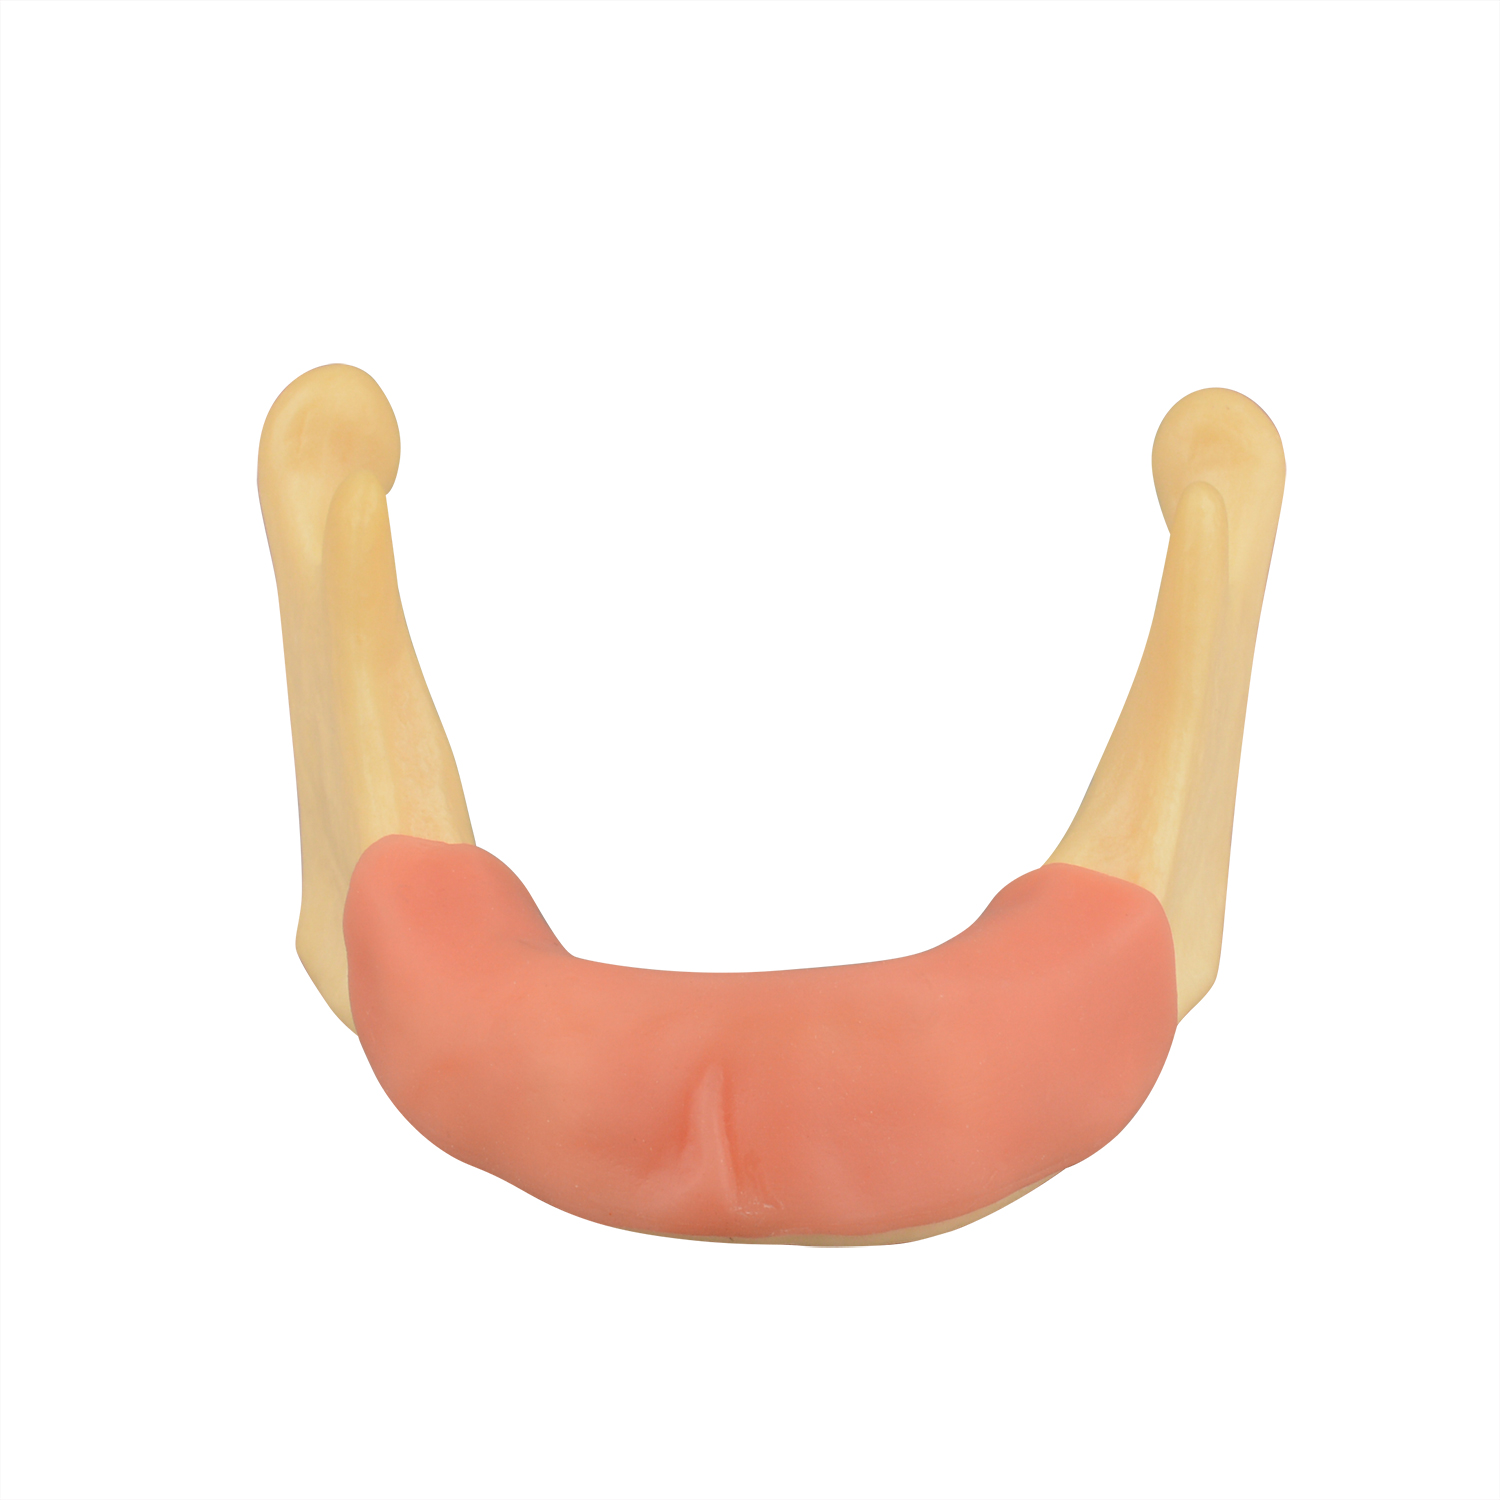 Mandible Lower Jaw Bone Model with Gum, Edentulous - Dental Practice Study